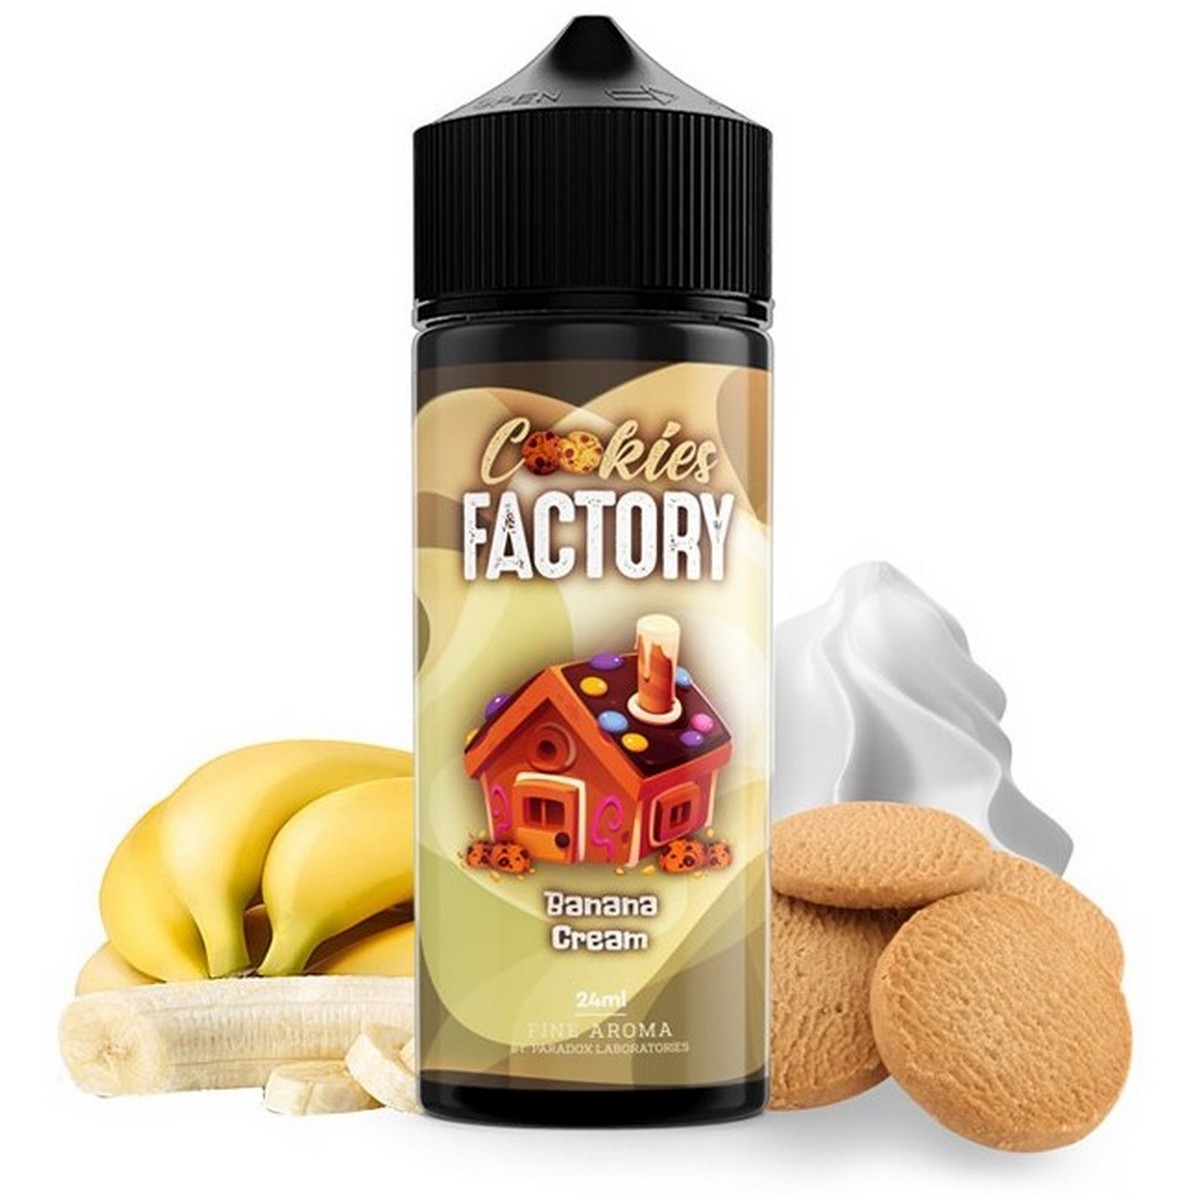 Cookies Factory Flavour Shot Banana Cream 24ml/120ml